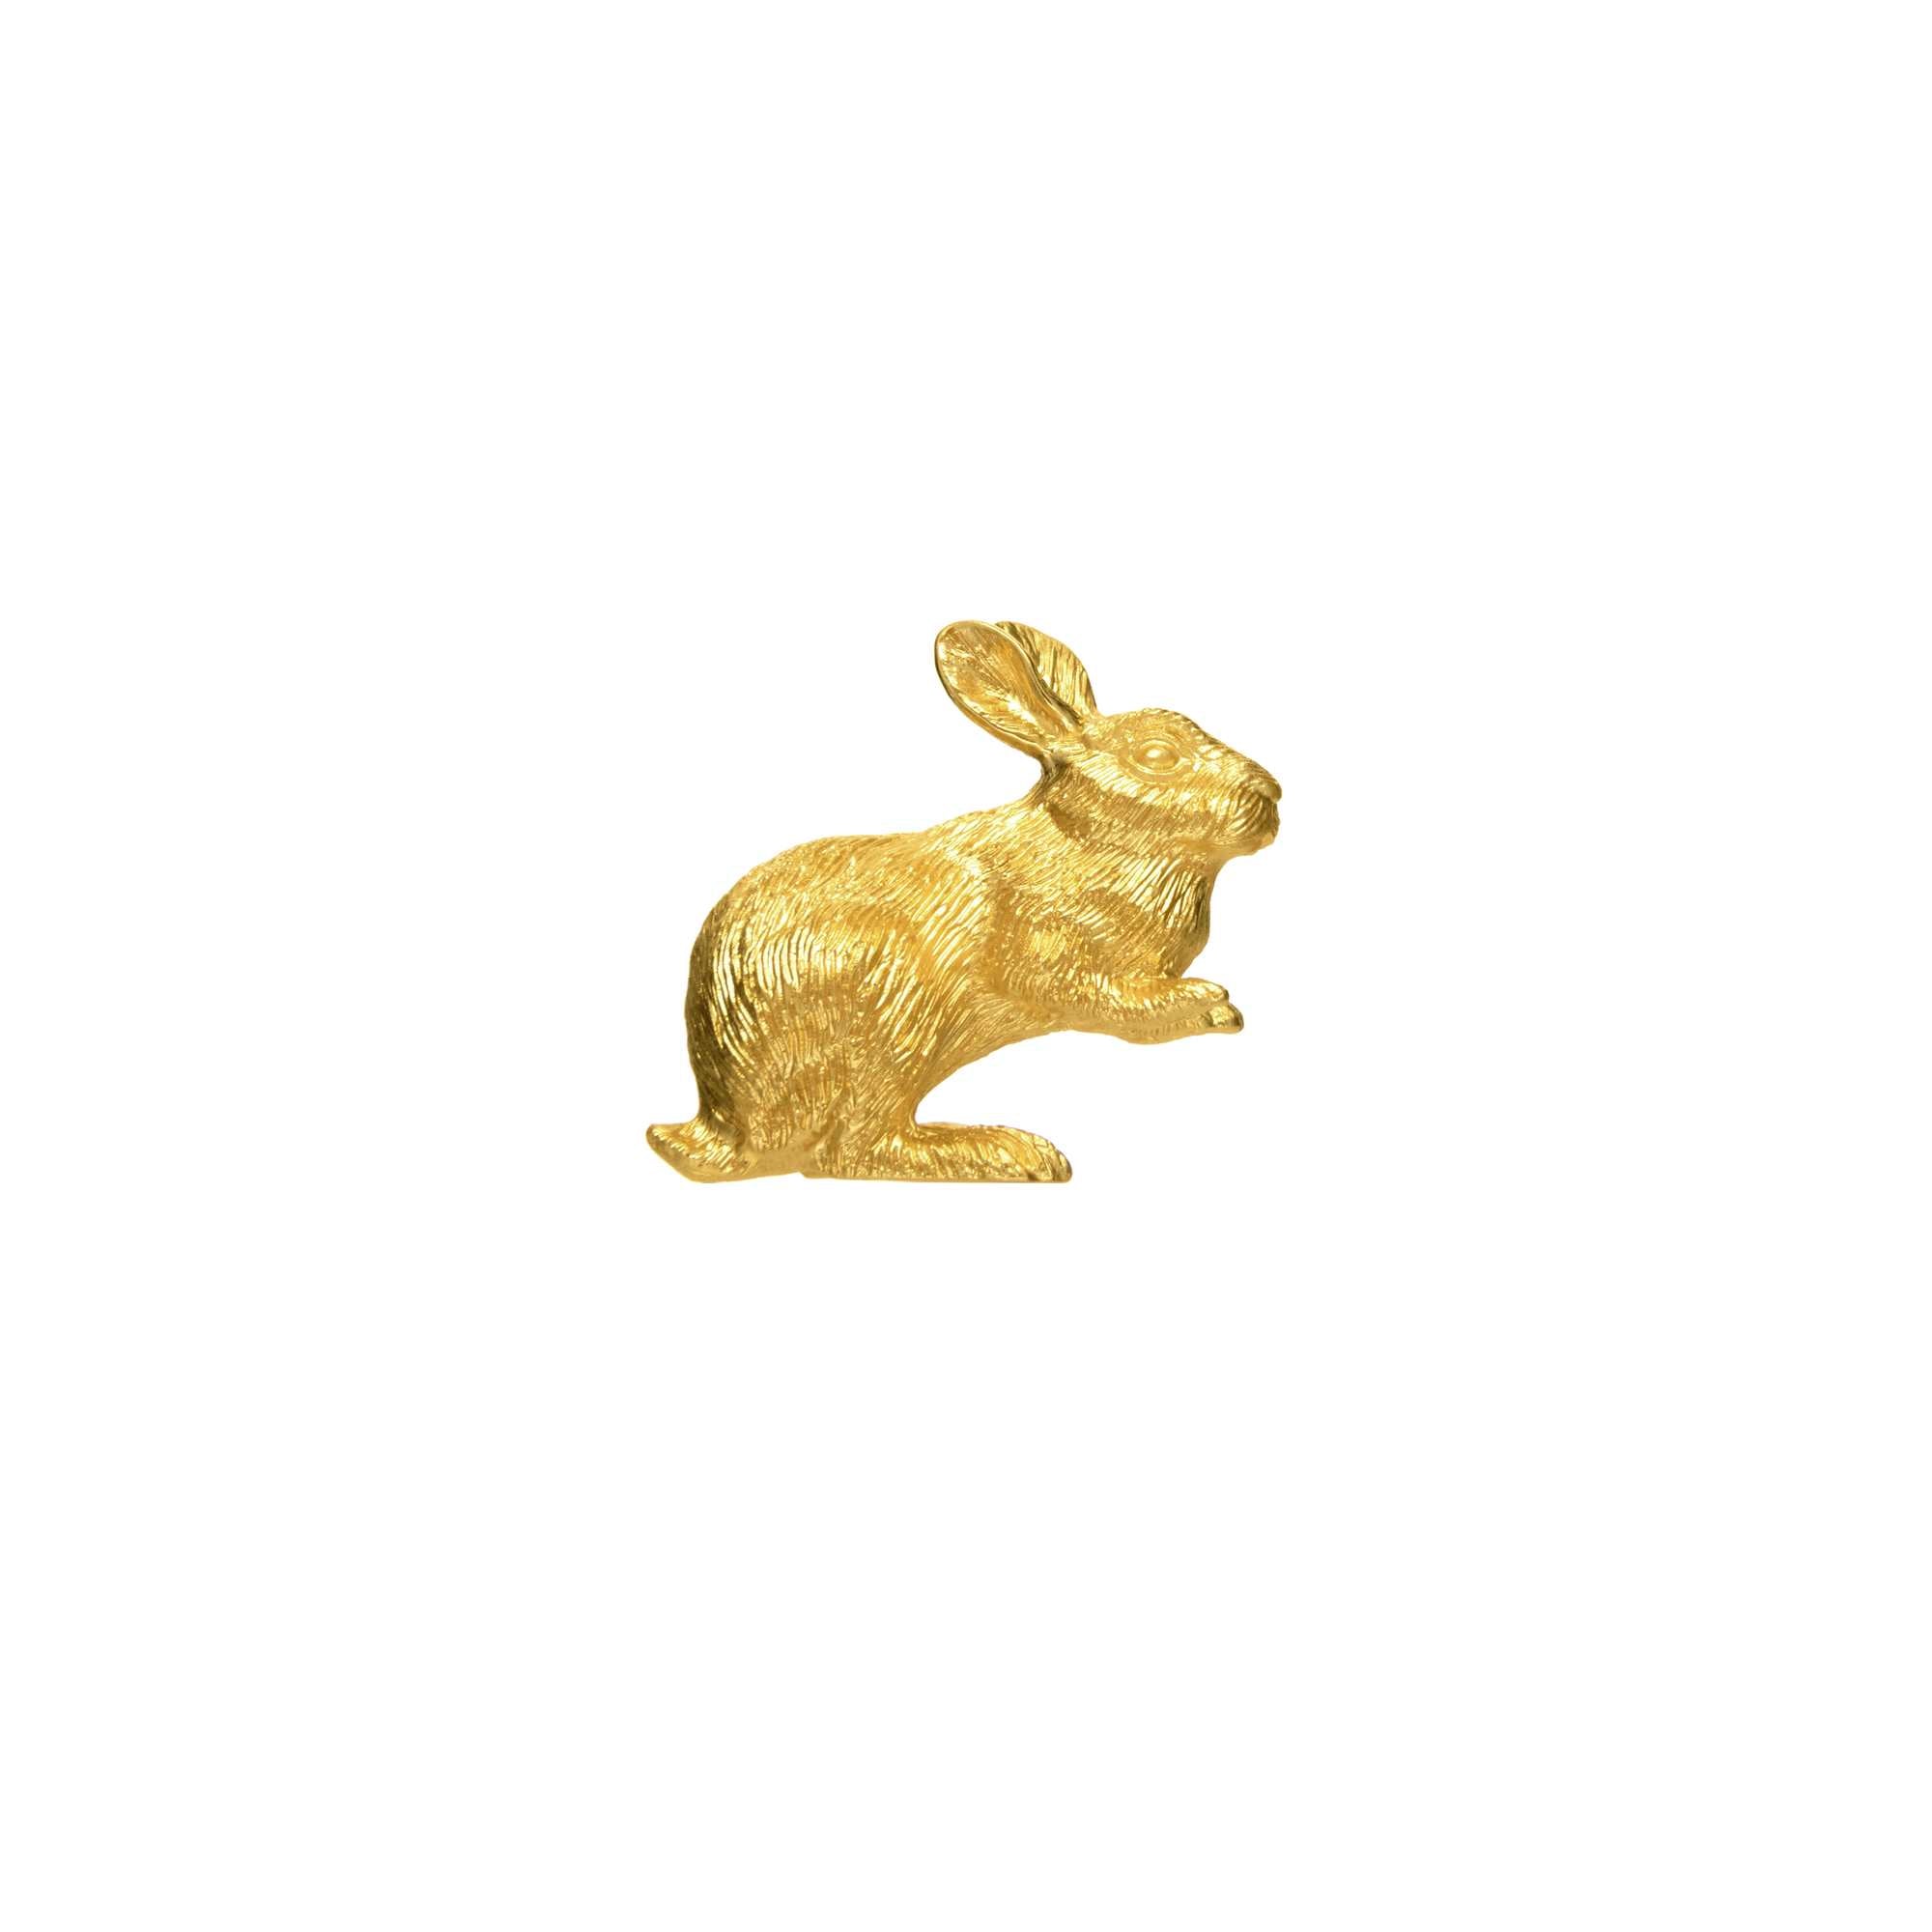 Mini Orientals - Rabbit